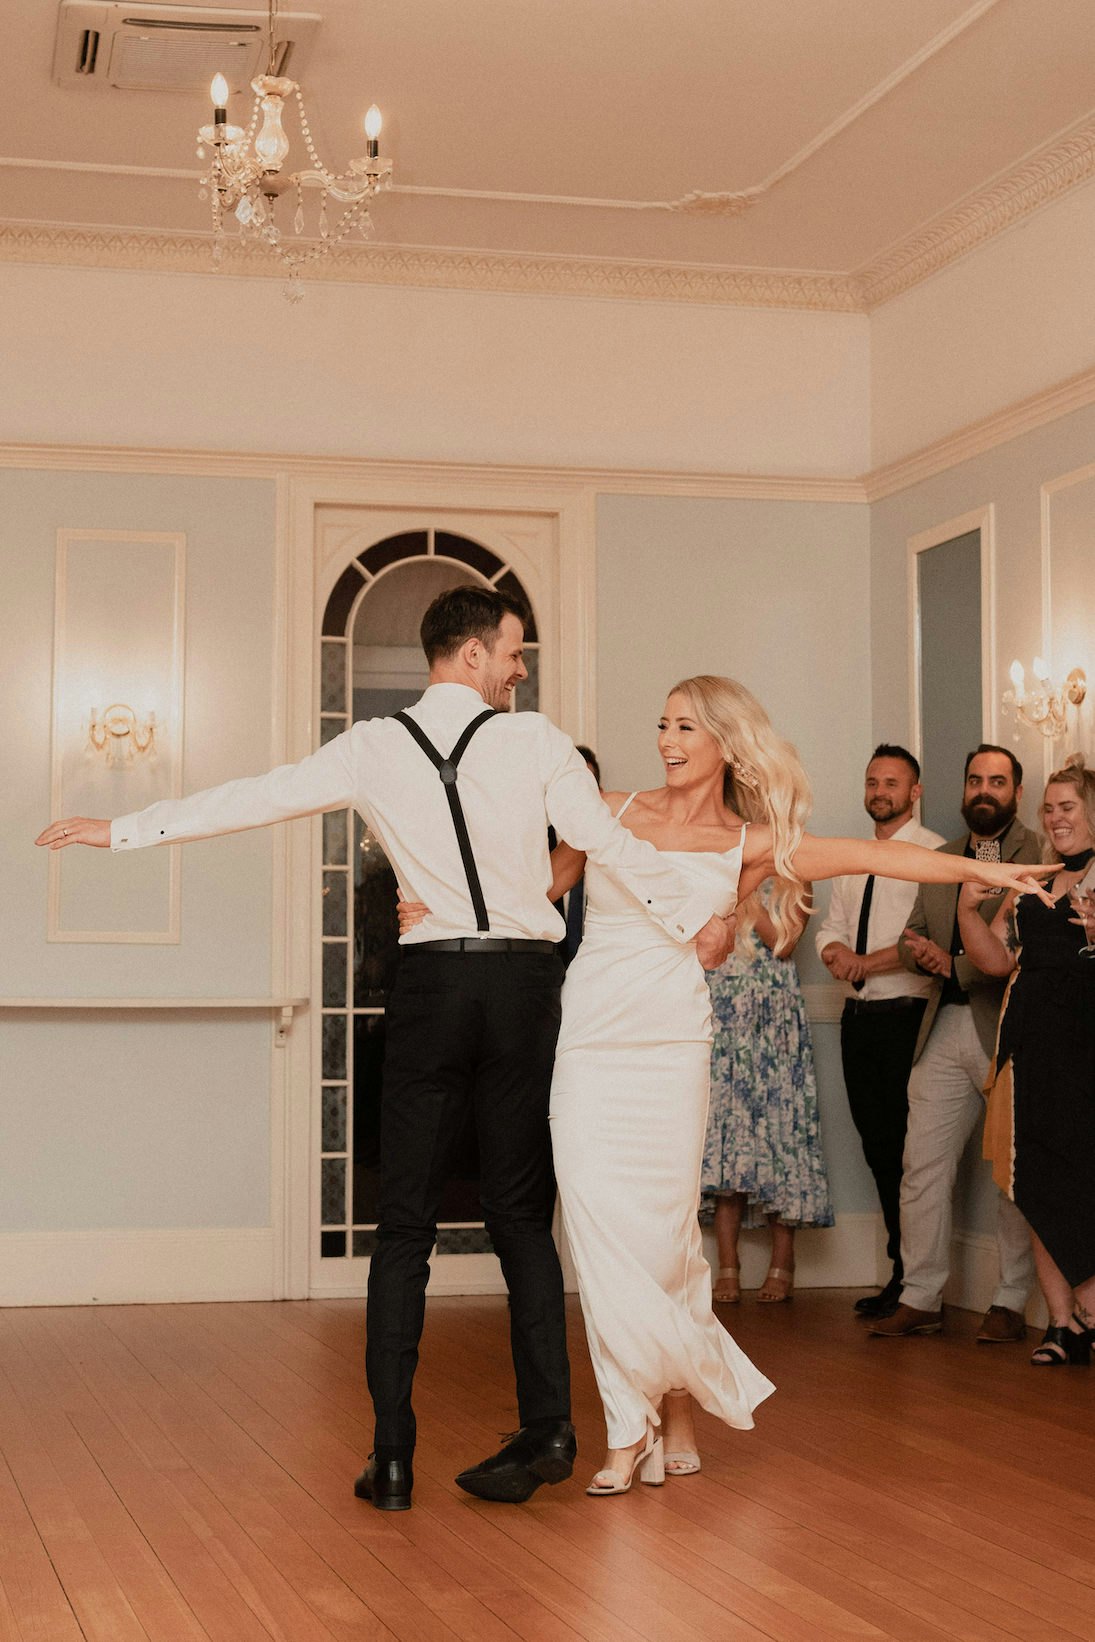 Bride and groom dancing in a ballroom 